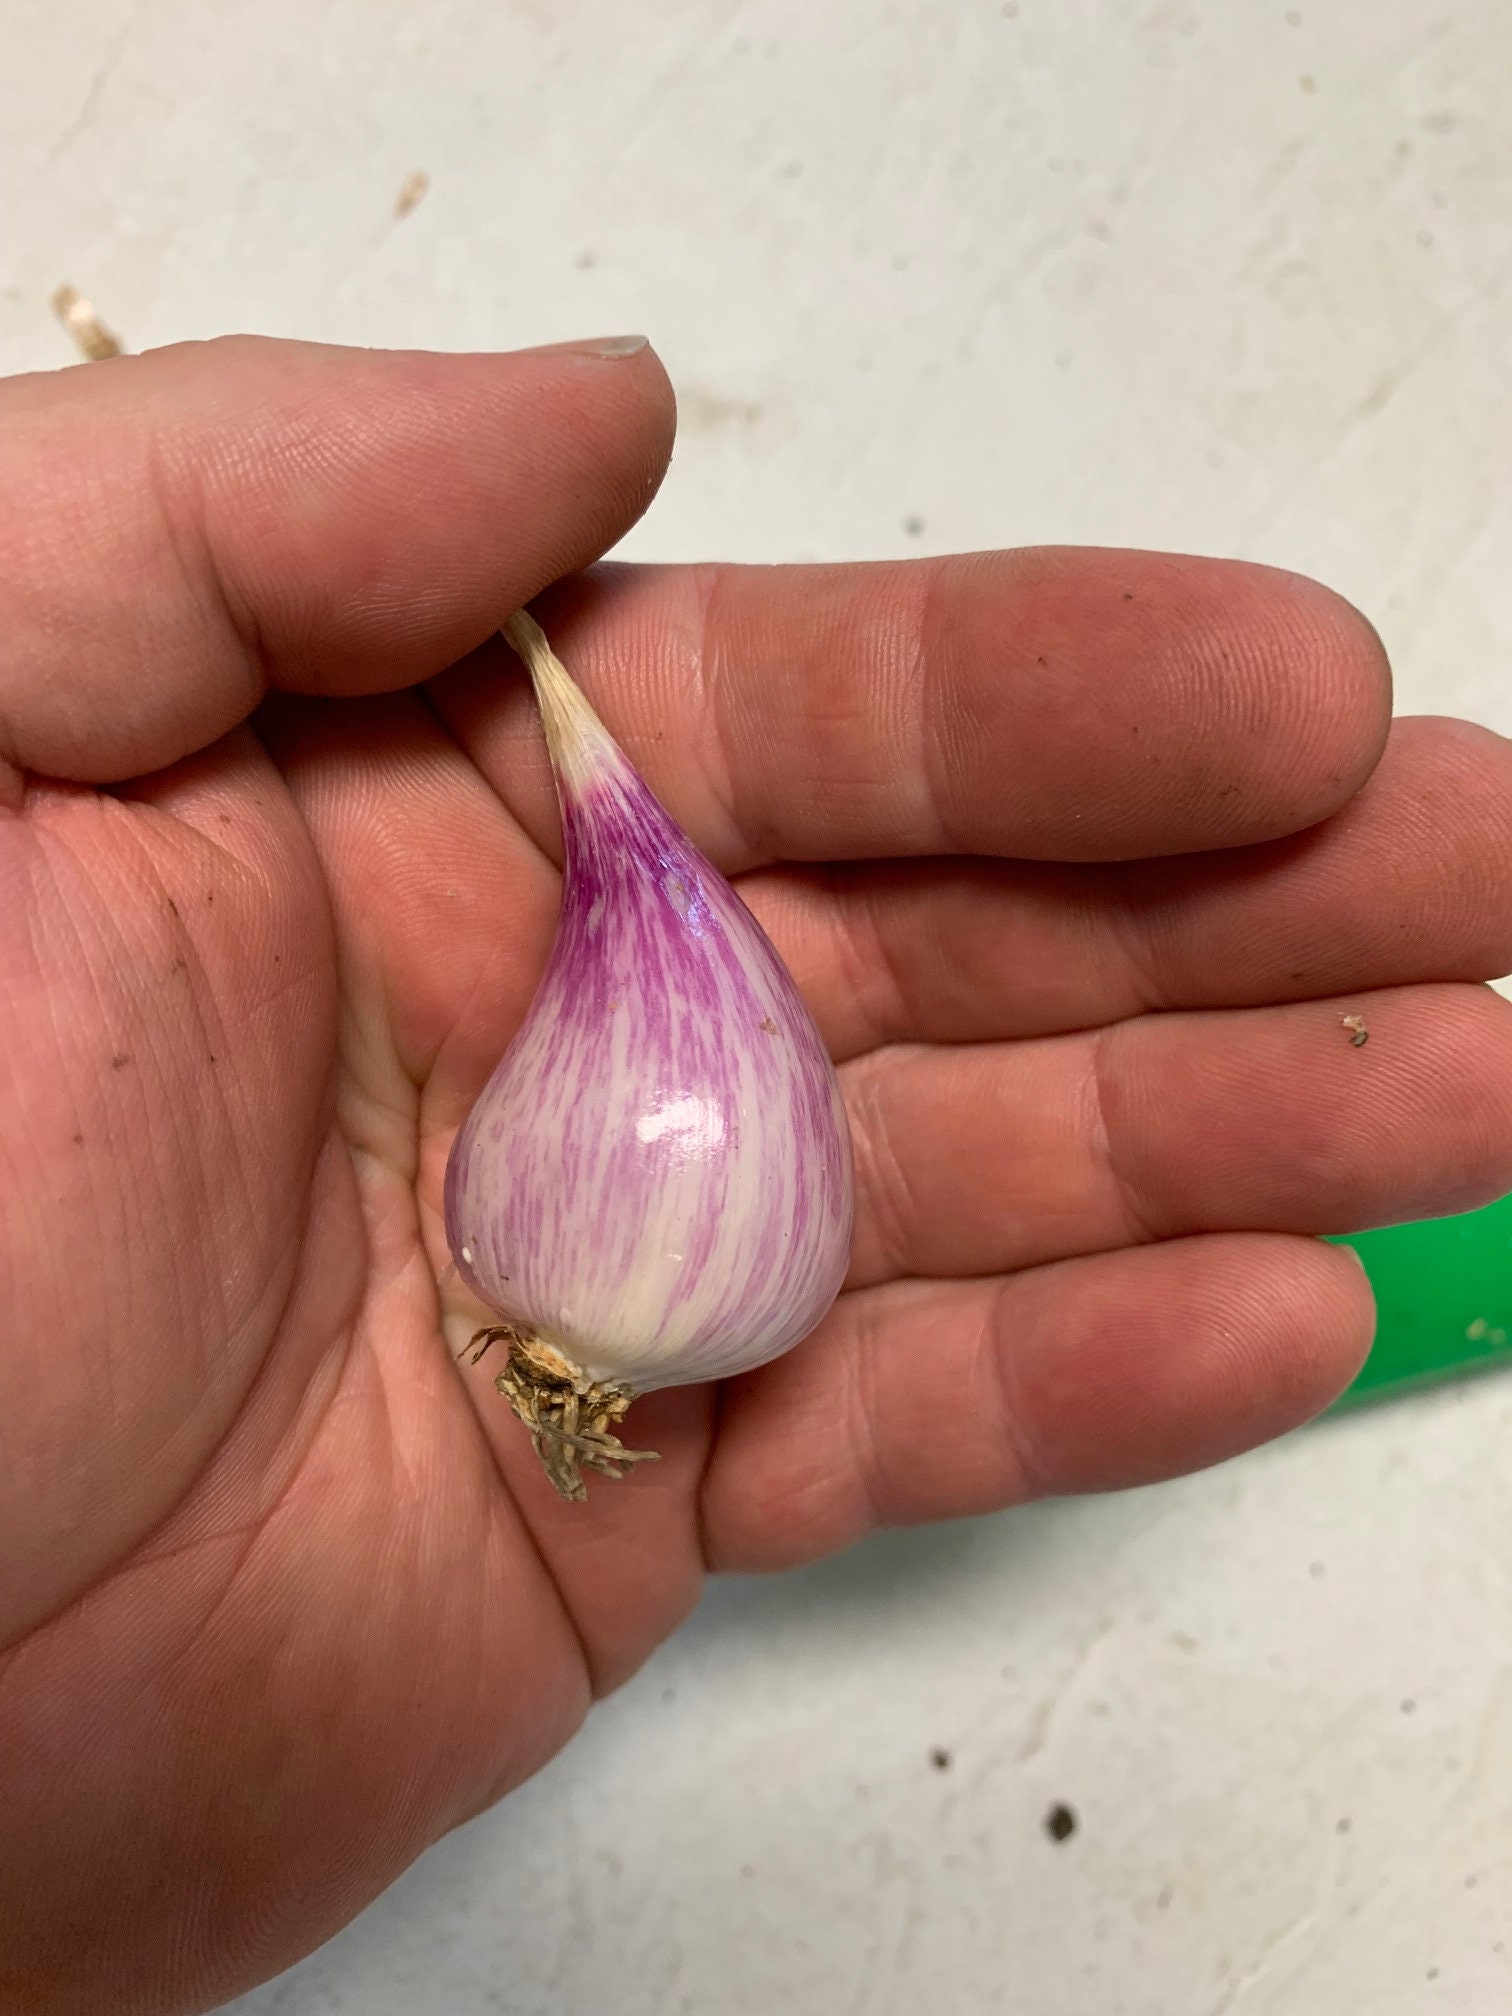 NERO SHALLOT Sets - Non-Gmo Bulbs, Garden Seed Shallots - Traditional Round  Shape, Fresh Multiplier Onions